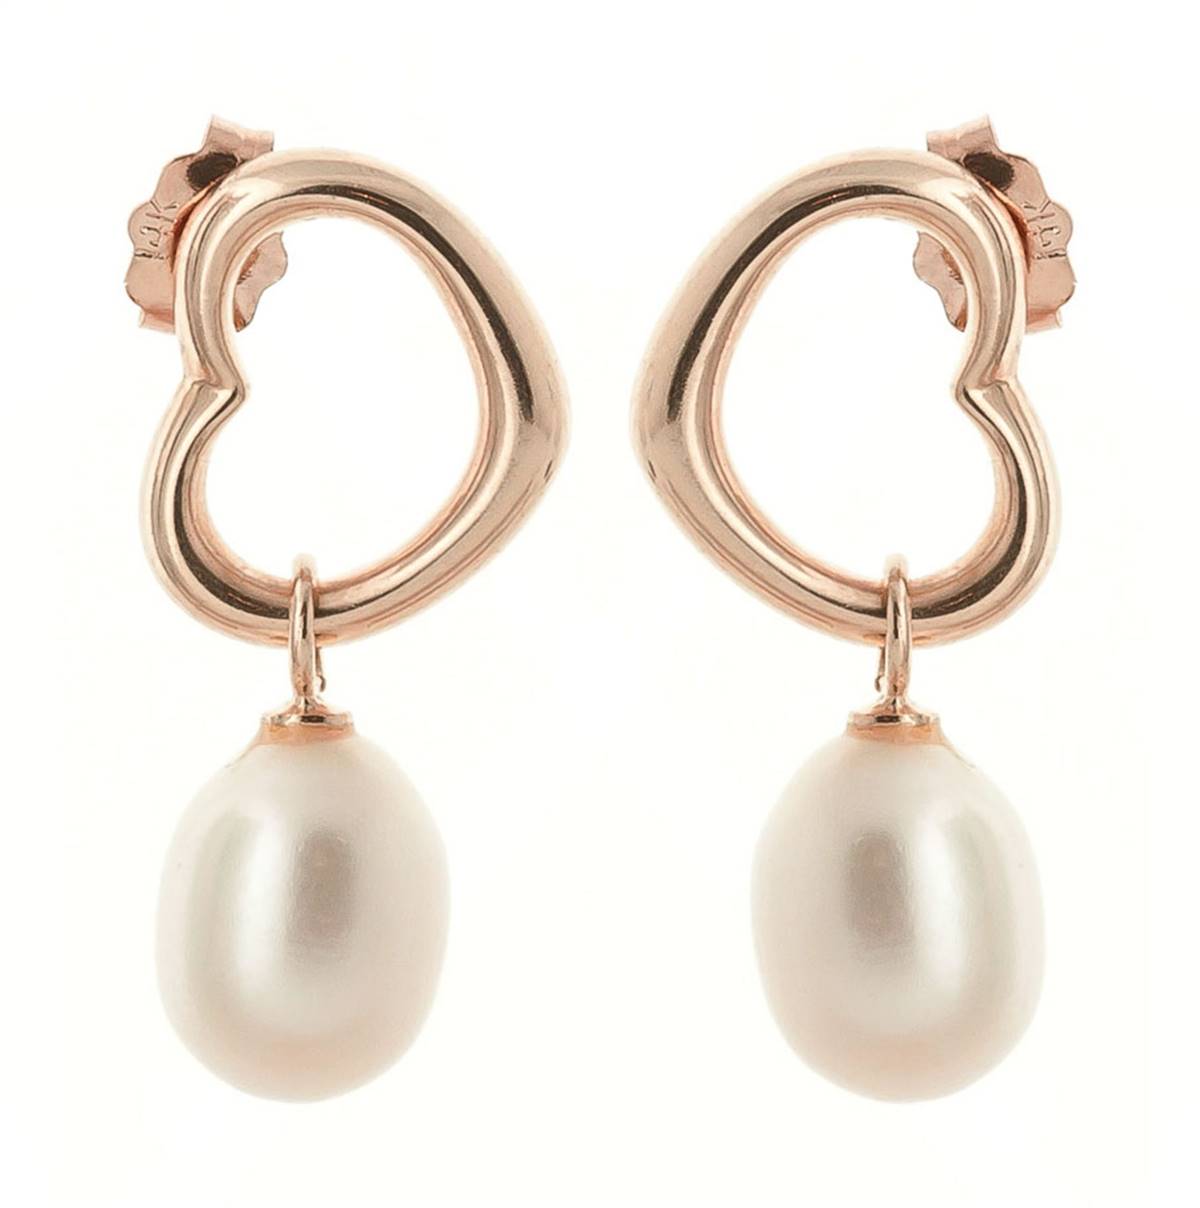 14K Solid Rose Gold Heart Earrings w/ Dangling Natural Pearls